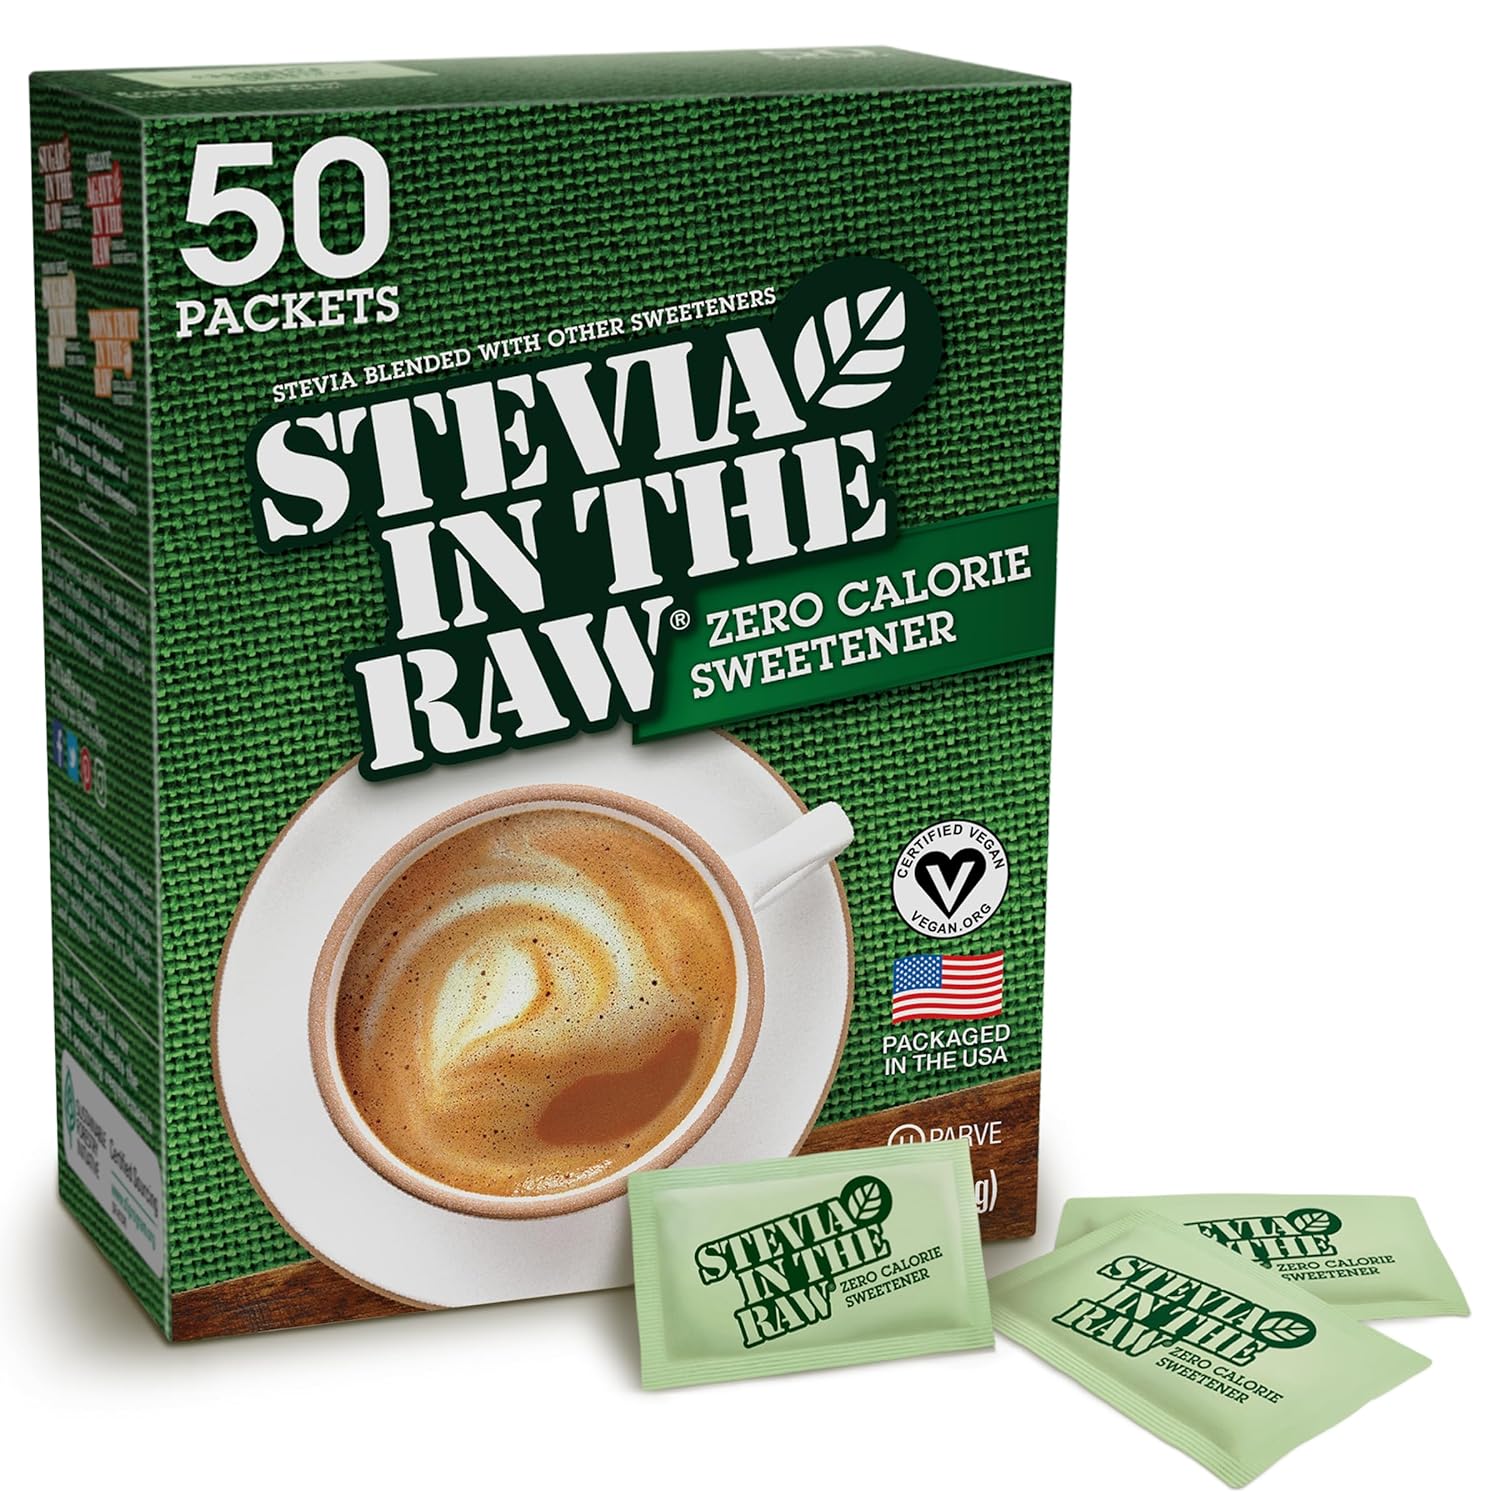 Stevia im Rohzustand | Mönchsfrucht gegen Stevia